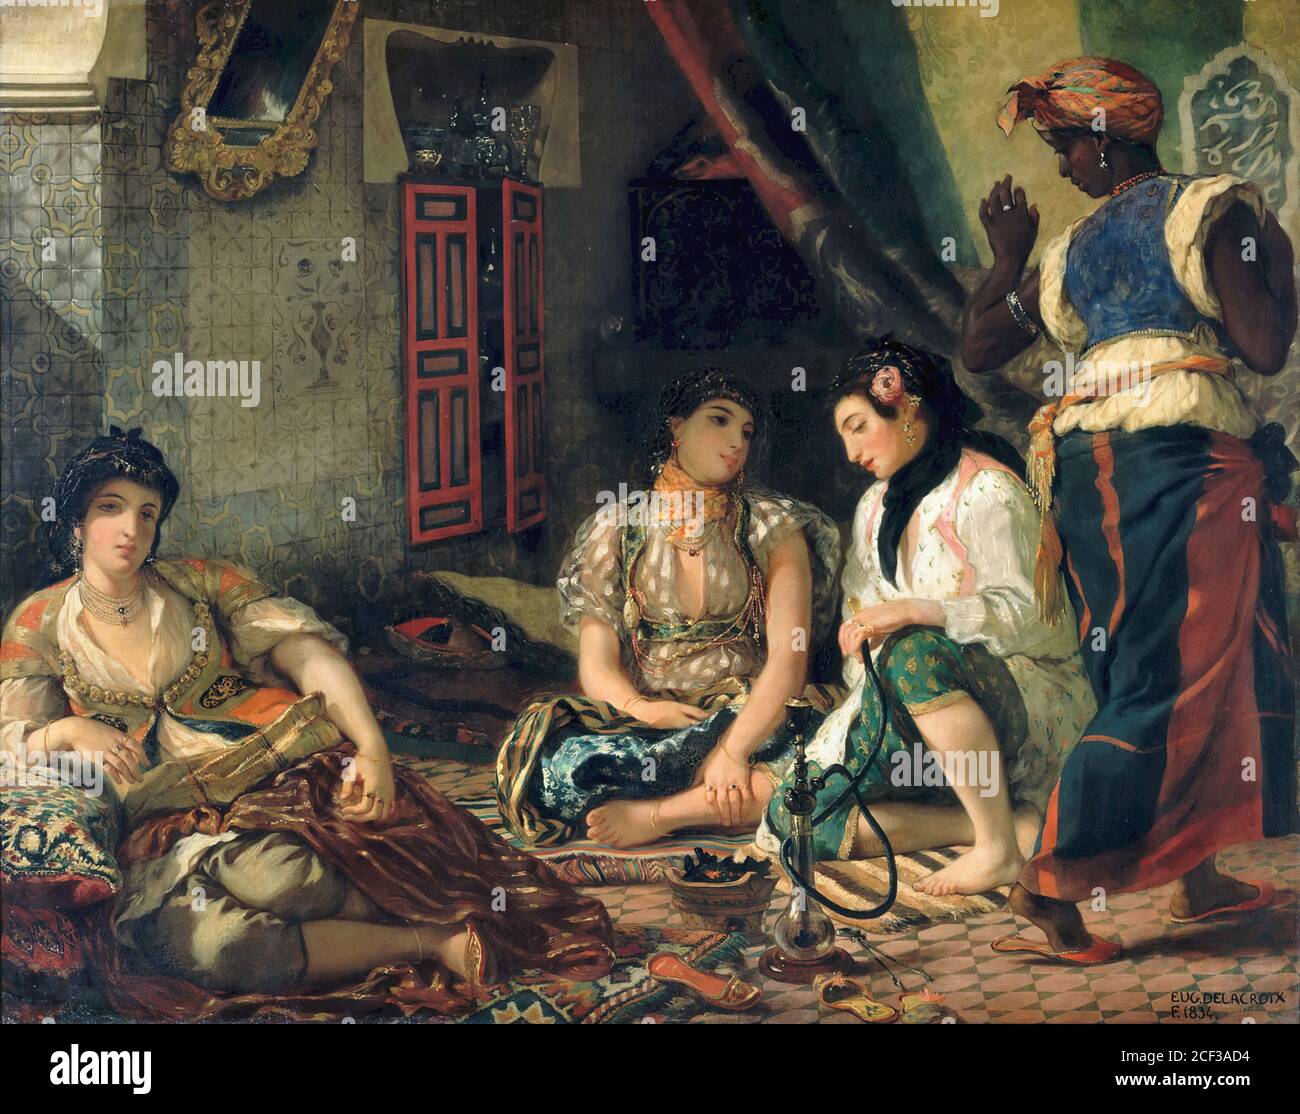 Delacroix Eugène - Algerian Women in Their Apartments 1 - French School -  19th Century Stock Photo - Alamy